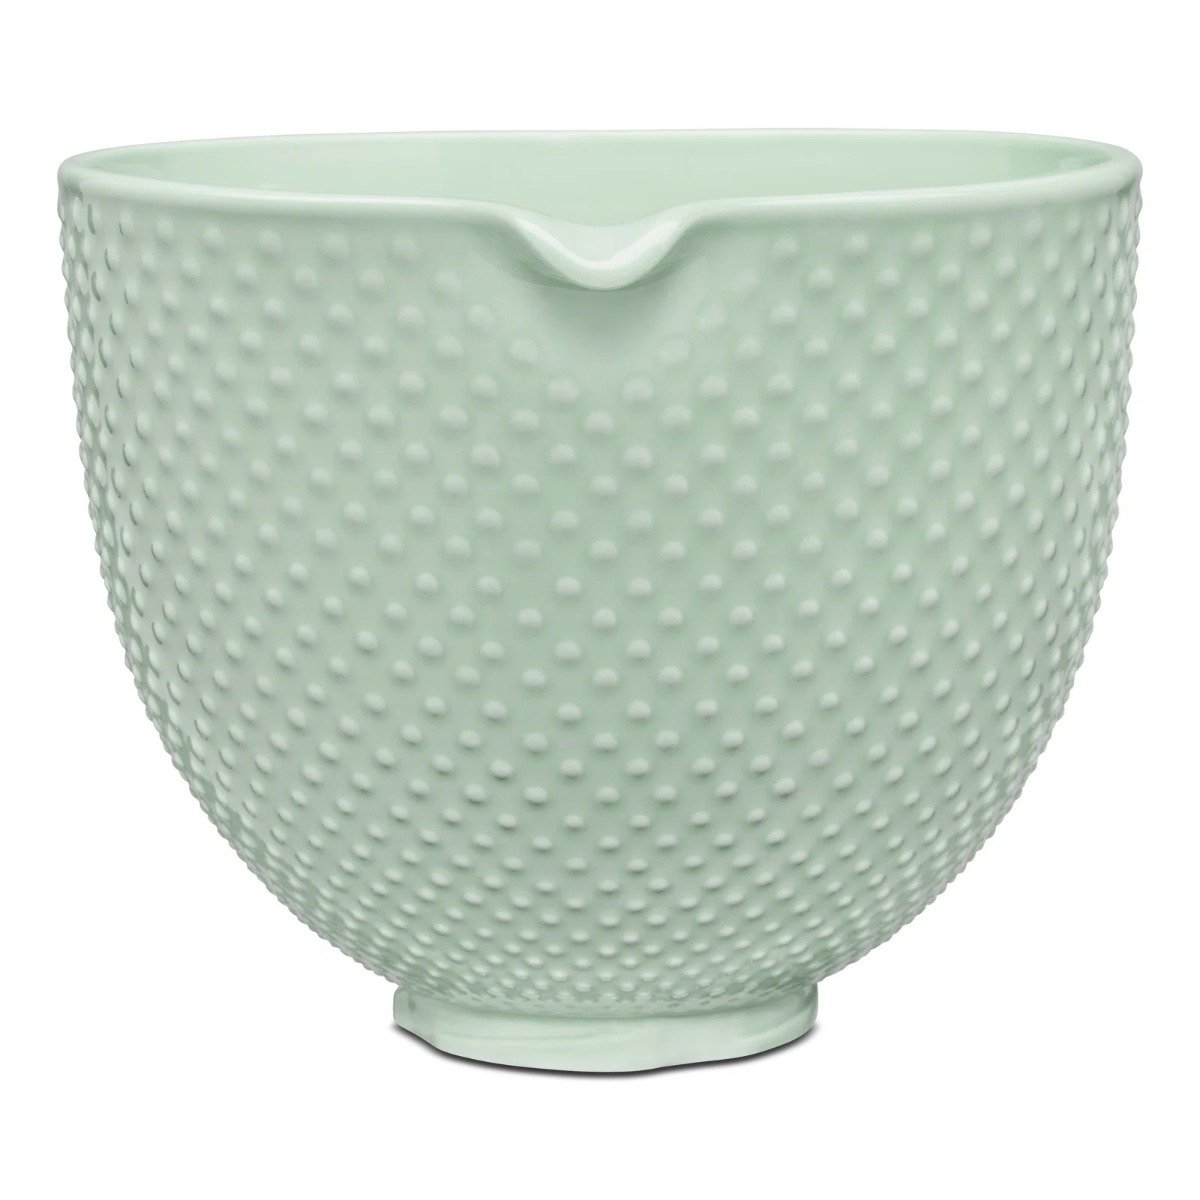 KitchenAid 5-Quart Dew Drop Ceramic Bowl | Fits 4.5-Quart & 5-Quart KitchenAid Tilt-Head Stand Mixers - image 5 of 6